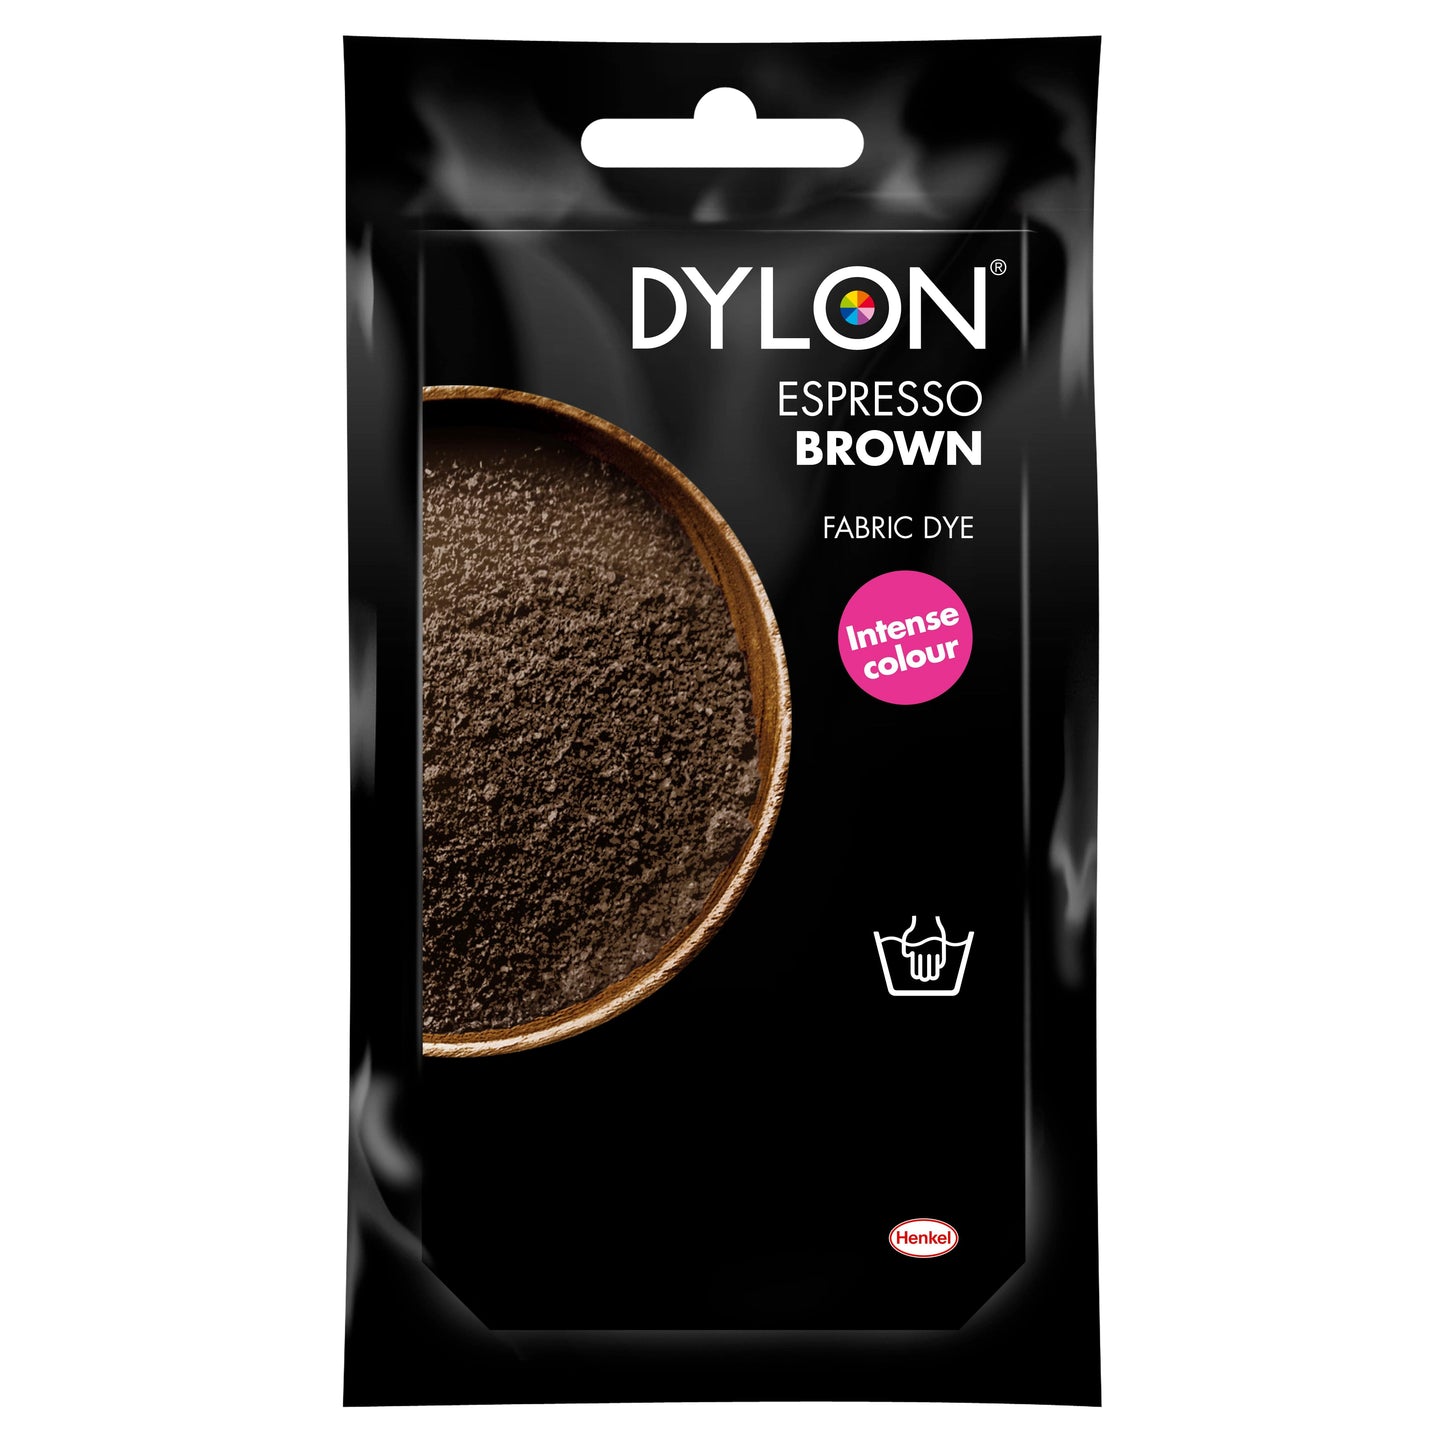 Dylon Hand Dye for Fabric in Espresso Brown